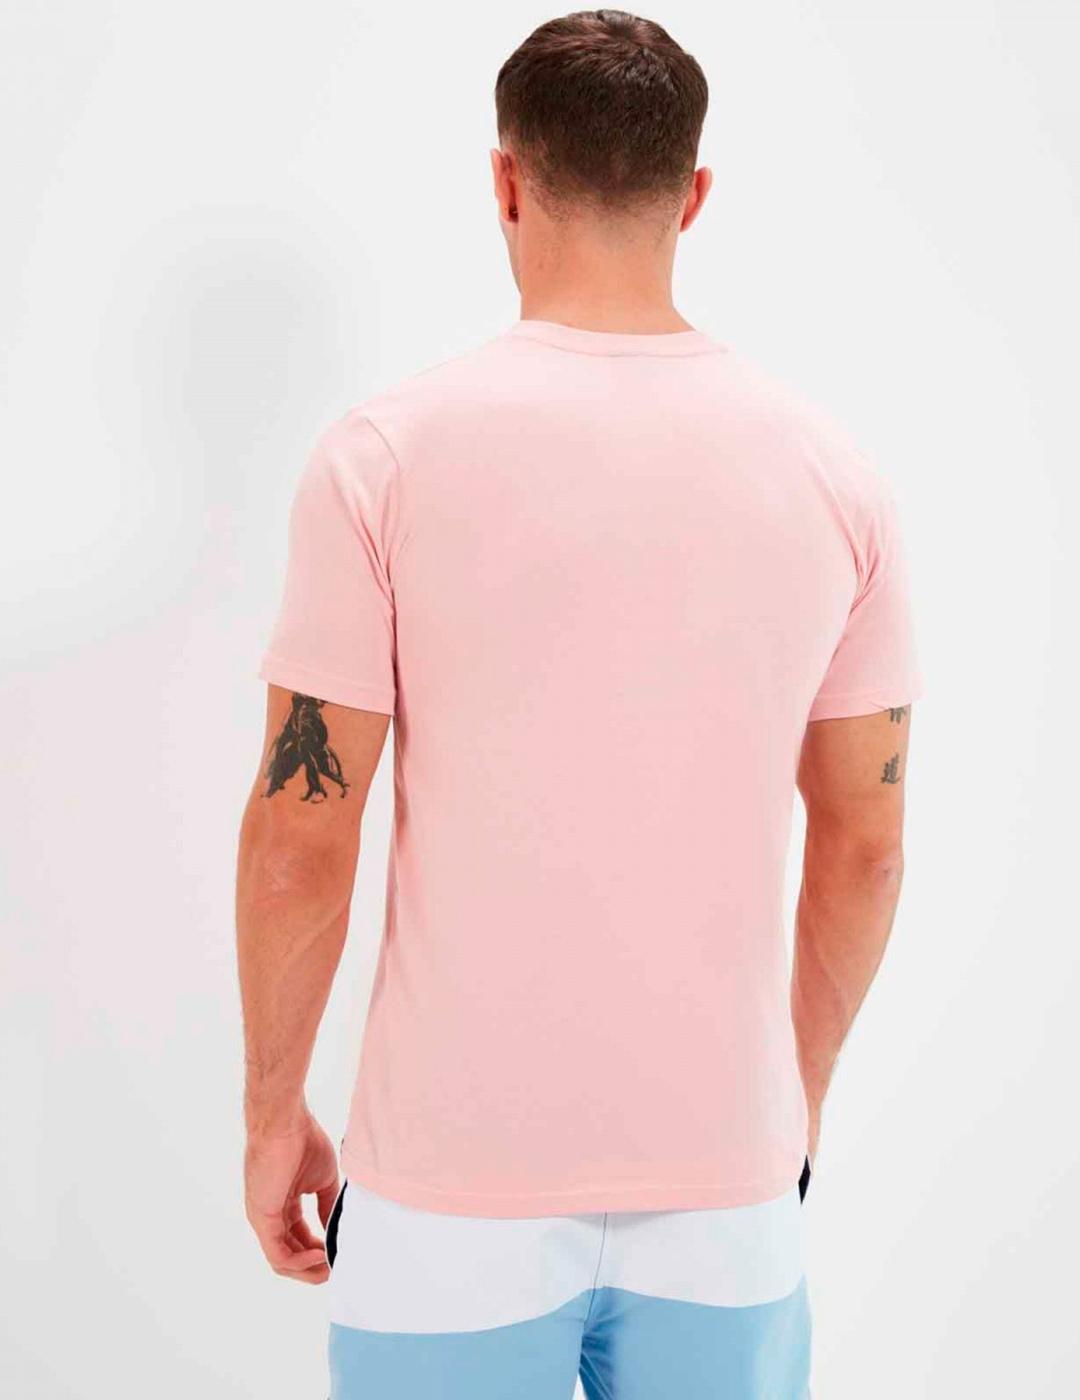 Camiseta APREL - Light Pink